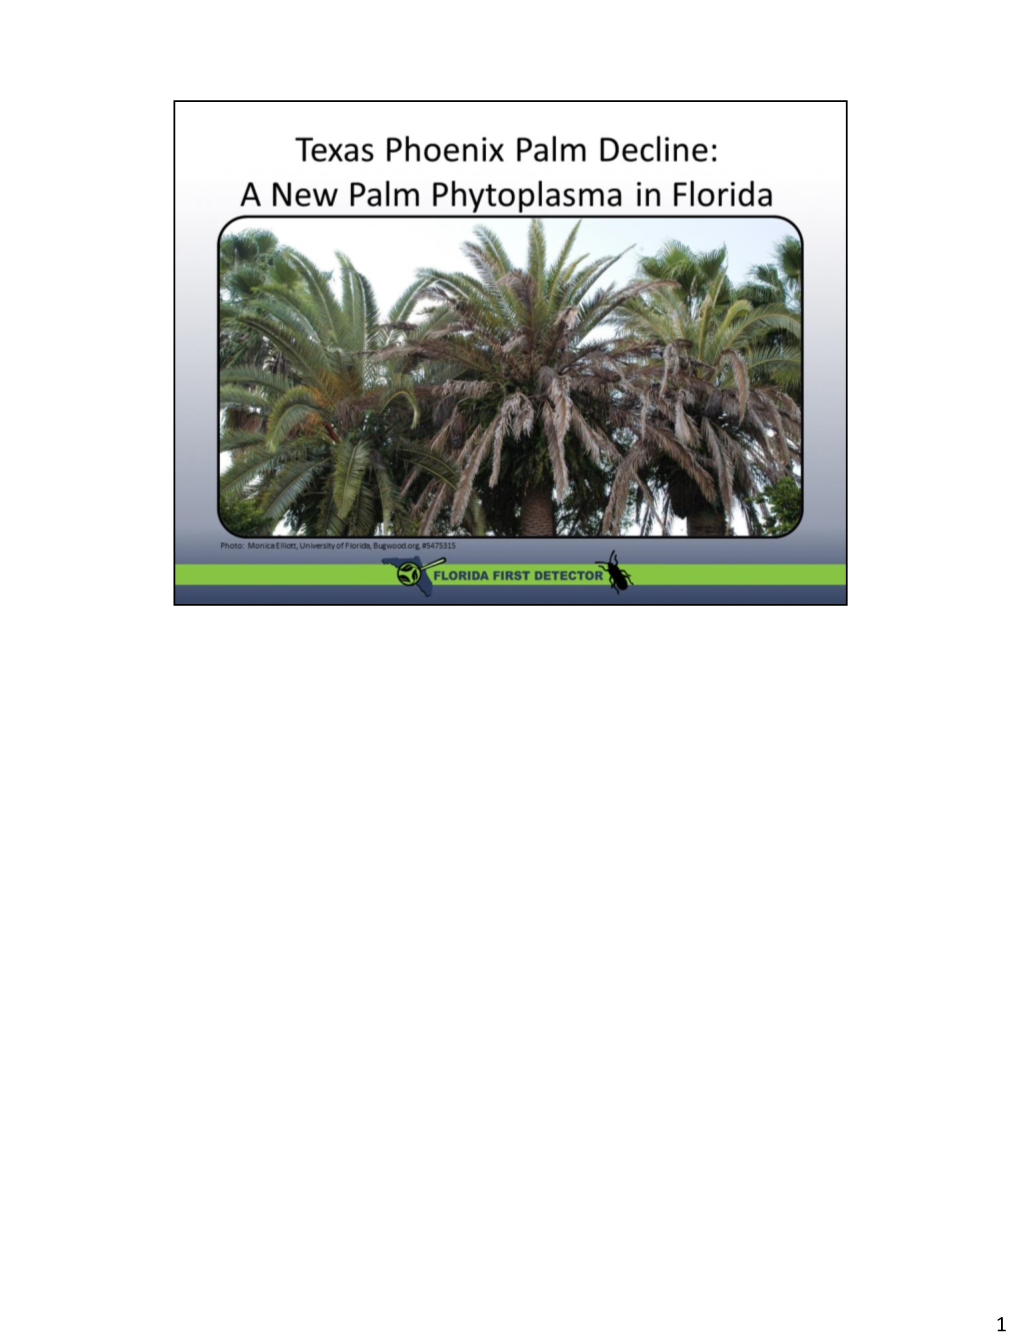 New Palm Phytoplasma in Florida